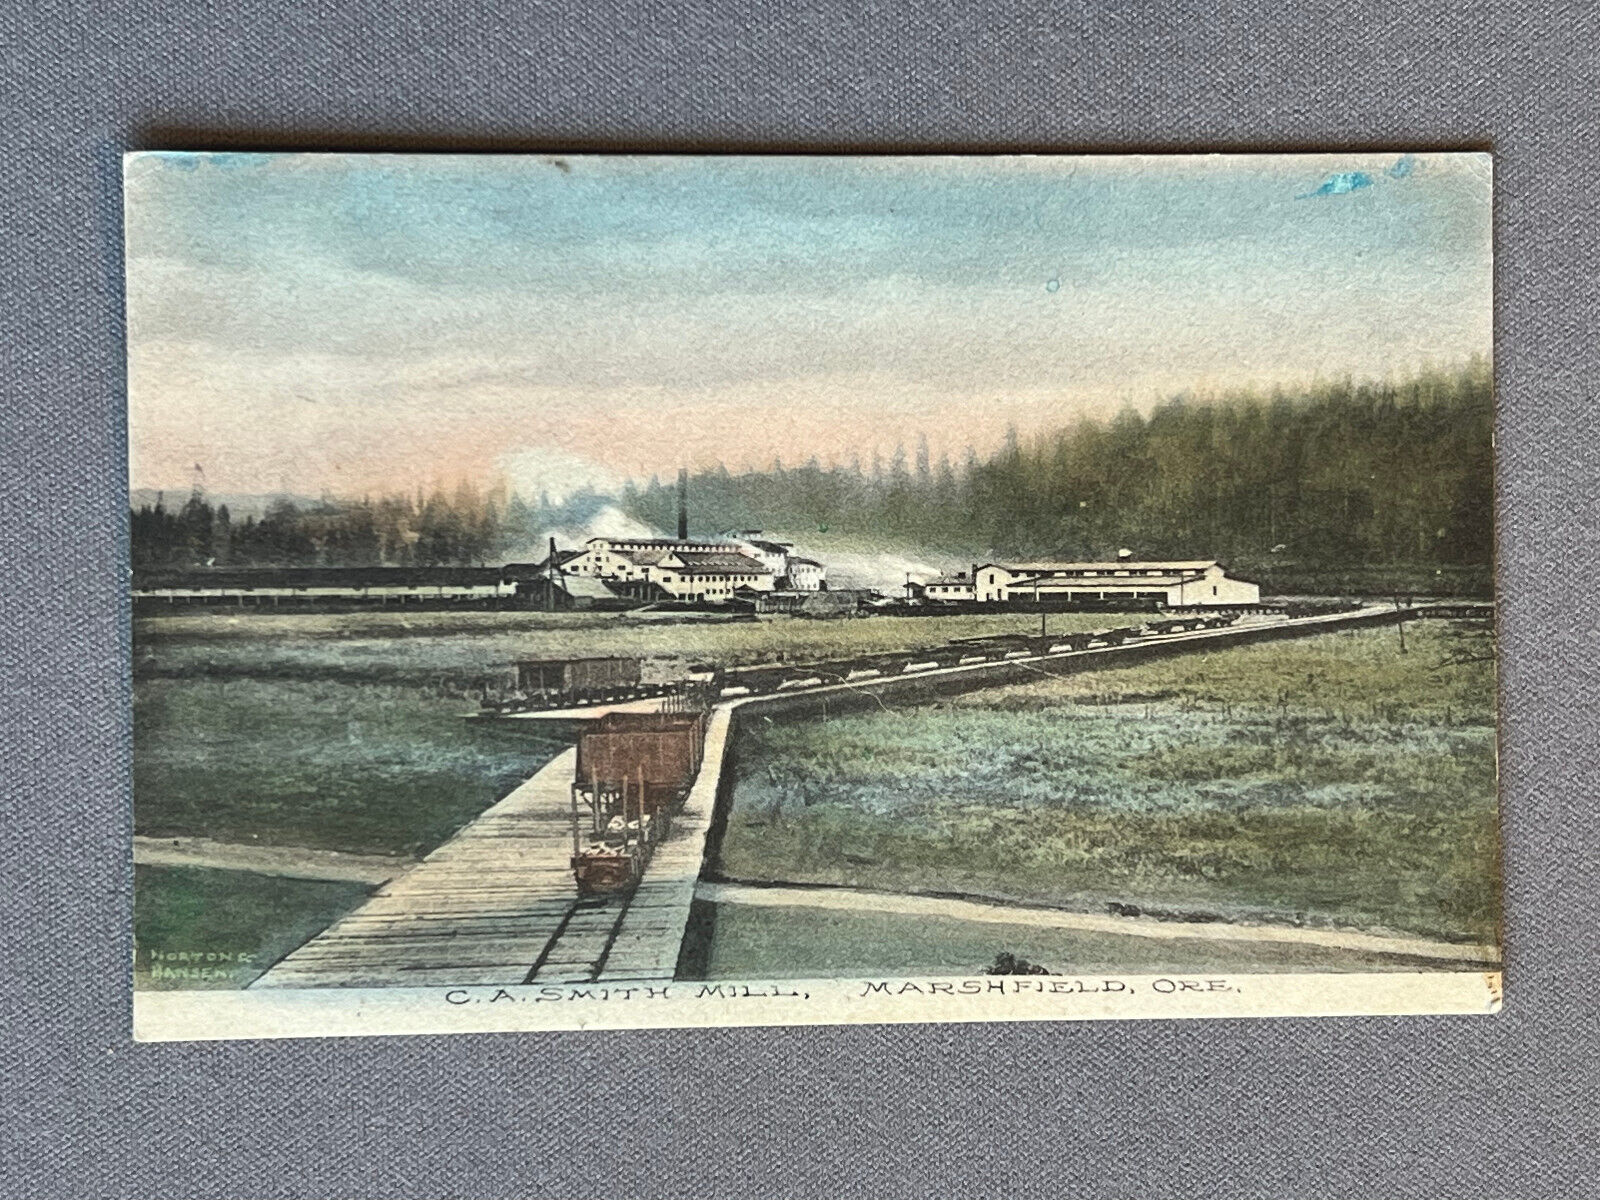 Oregon, OR, Marshfield, C. A. Smith Mill Smokestack & Railway Cars, ca 1910